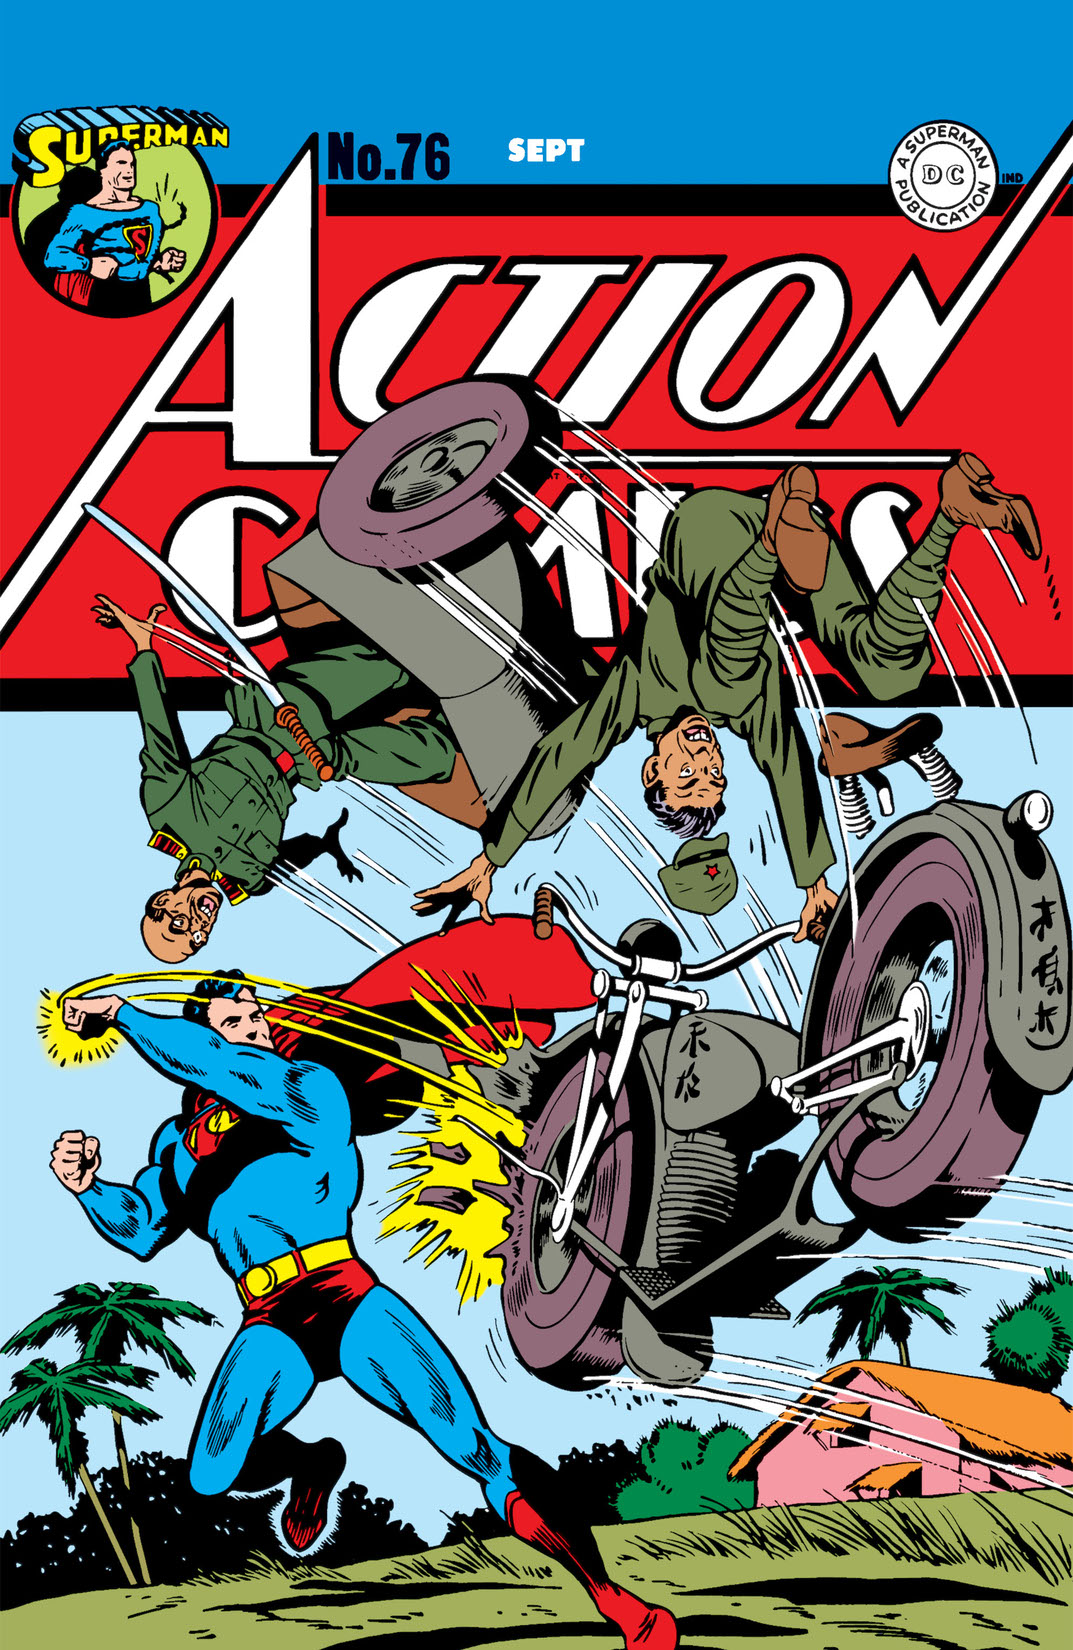 Action Comics (1938-) #76 preview images